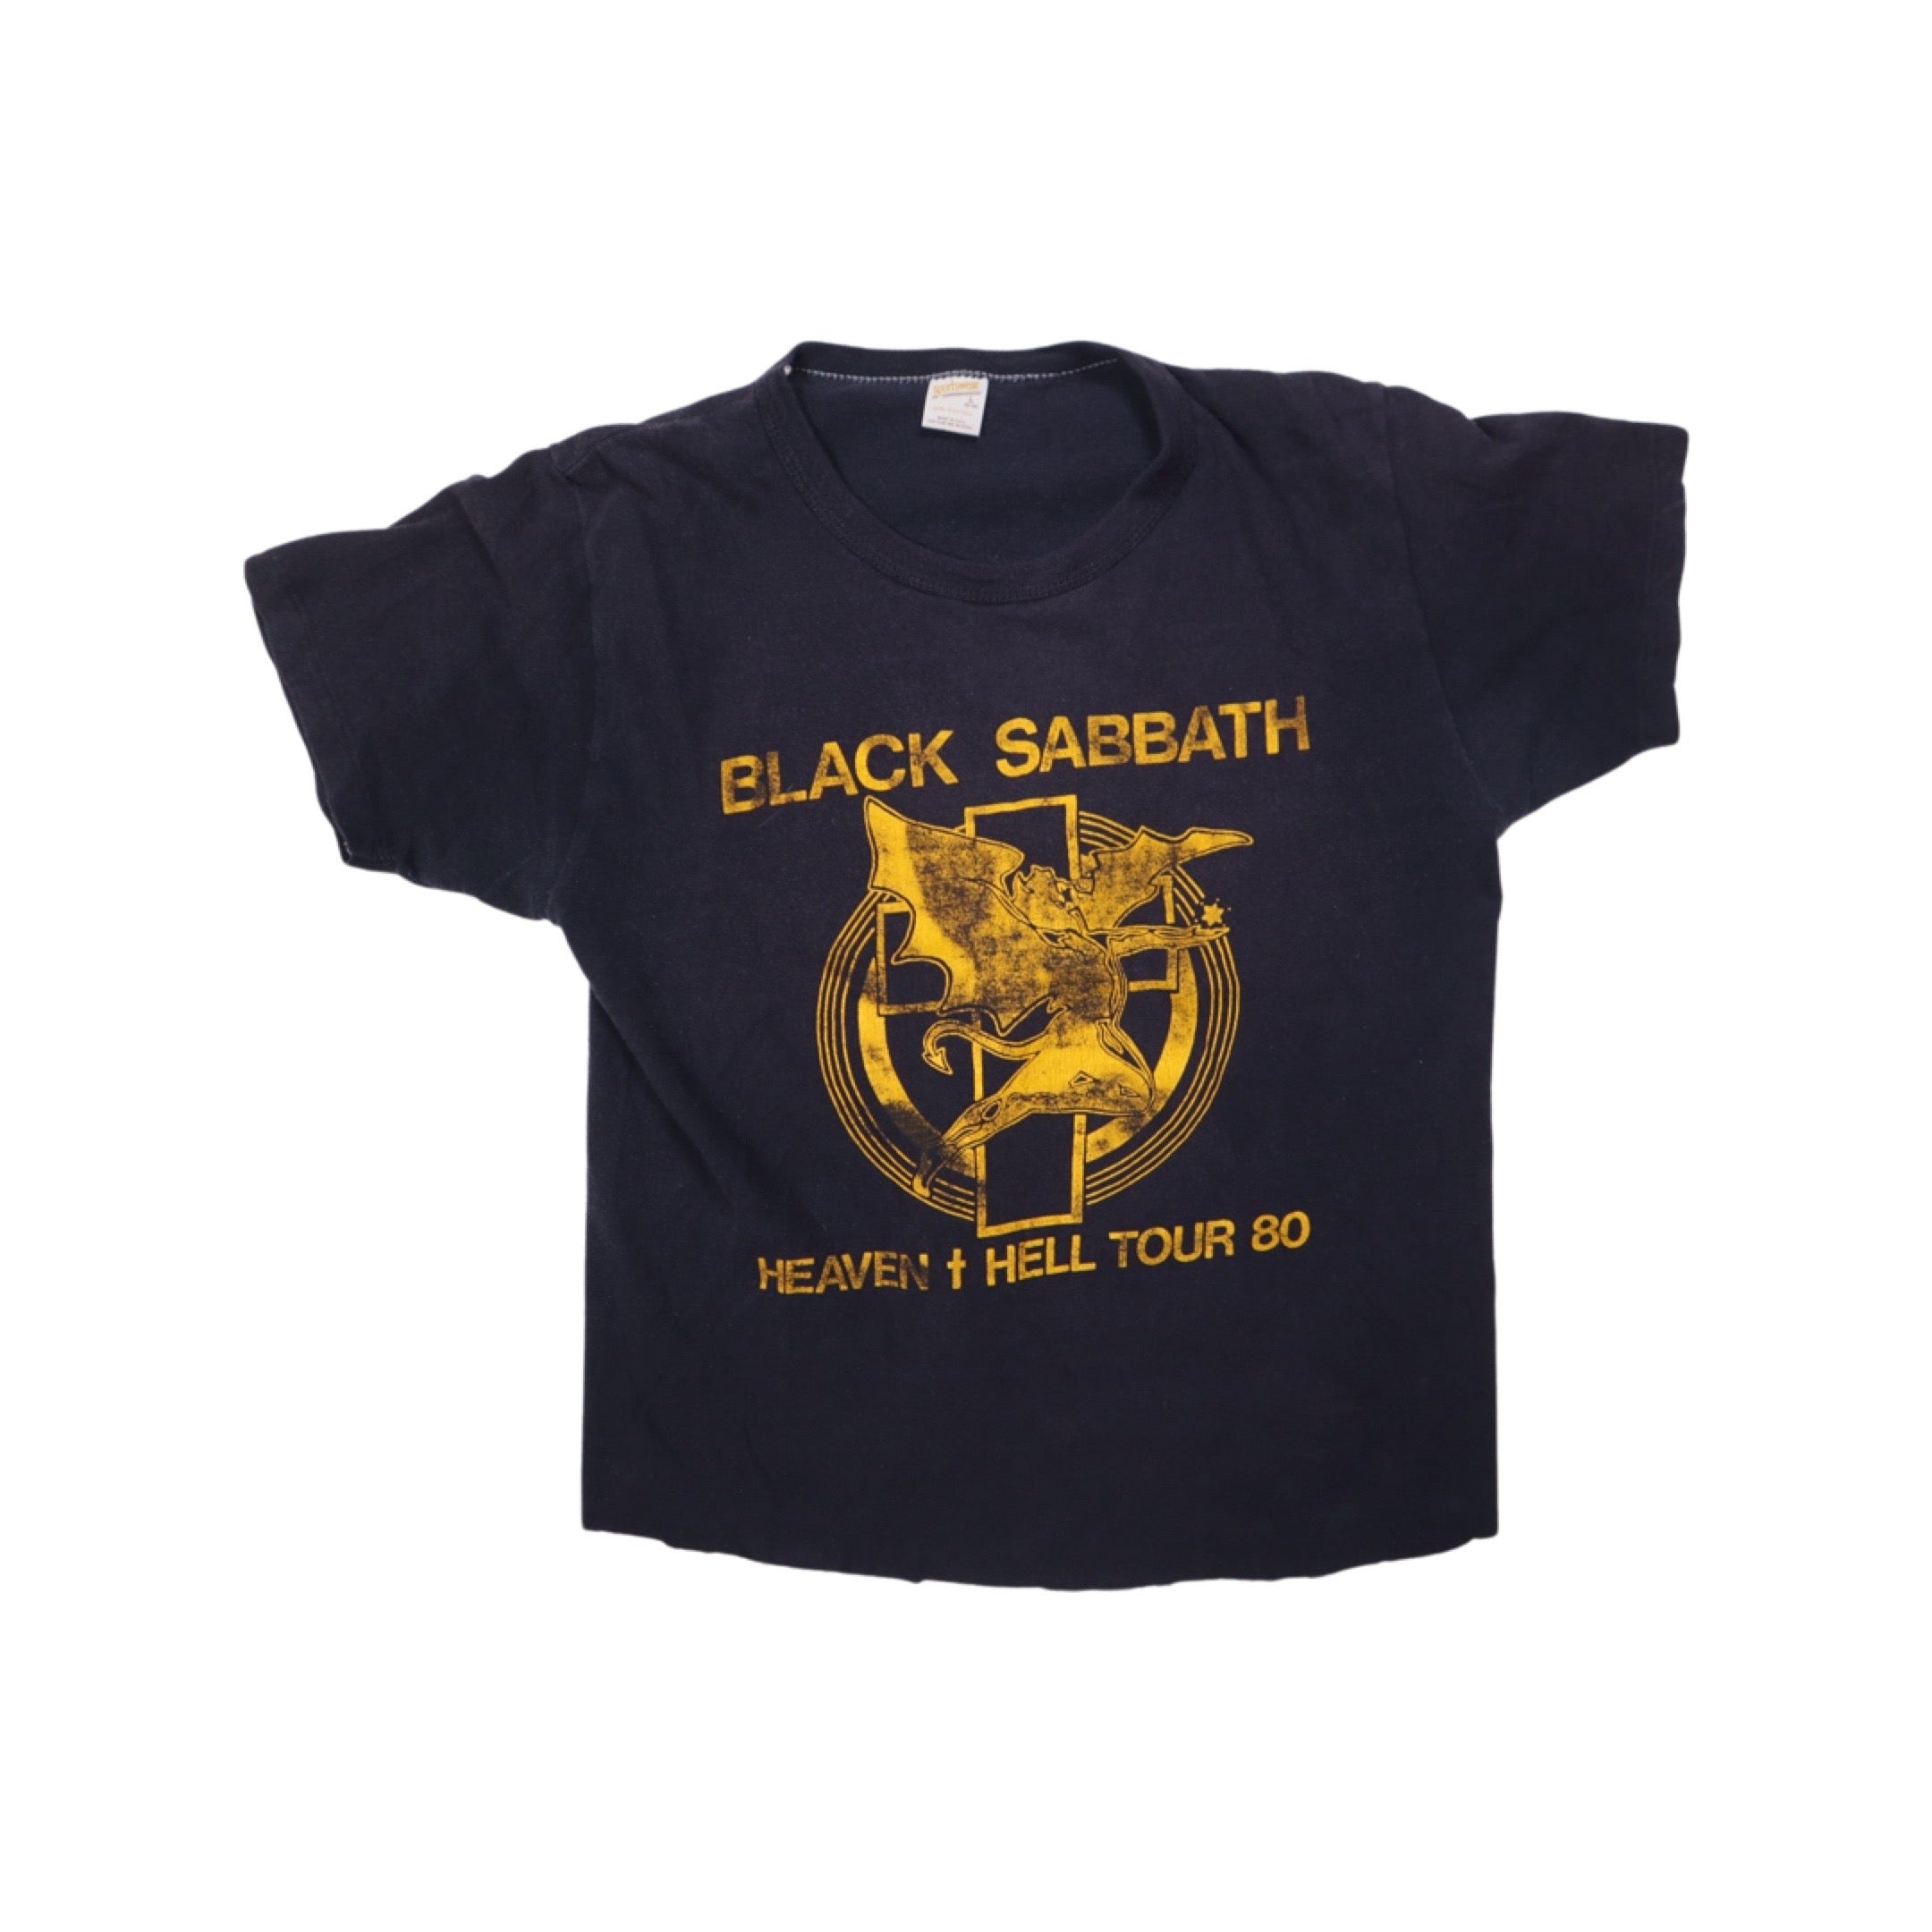 Black Sabbath 1980 Heaven & Hell T-Shirt Grail (Small)